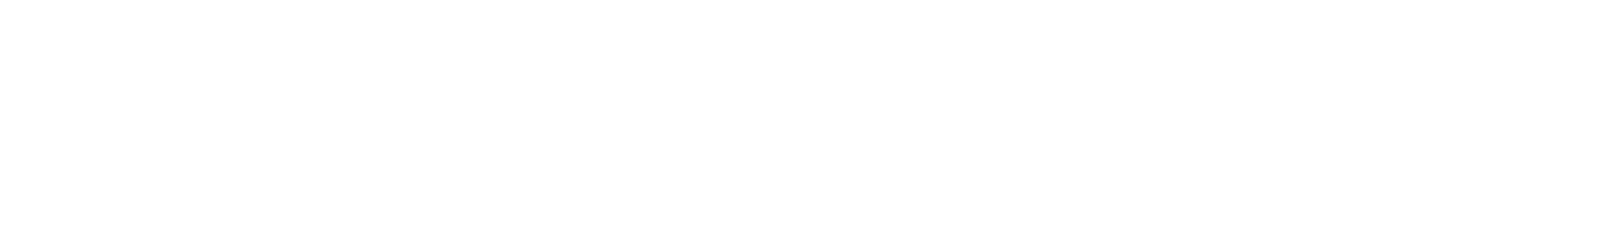 Z Holdings
 Logo groß für dunkle Hintergründe (transparentes PNG)